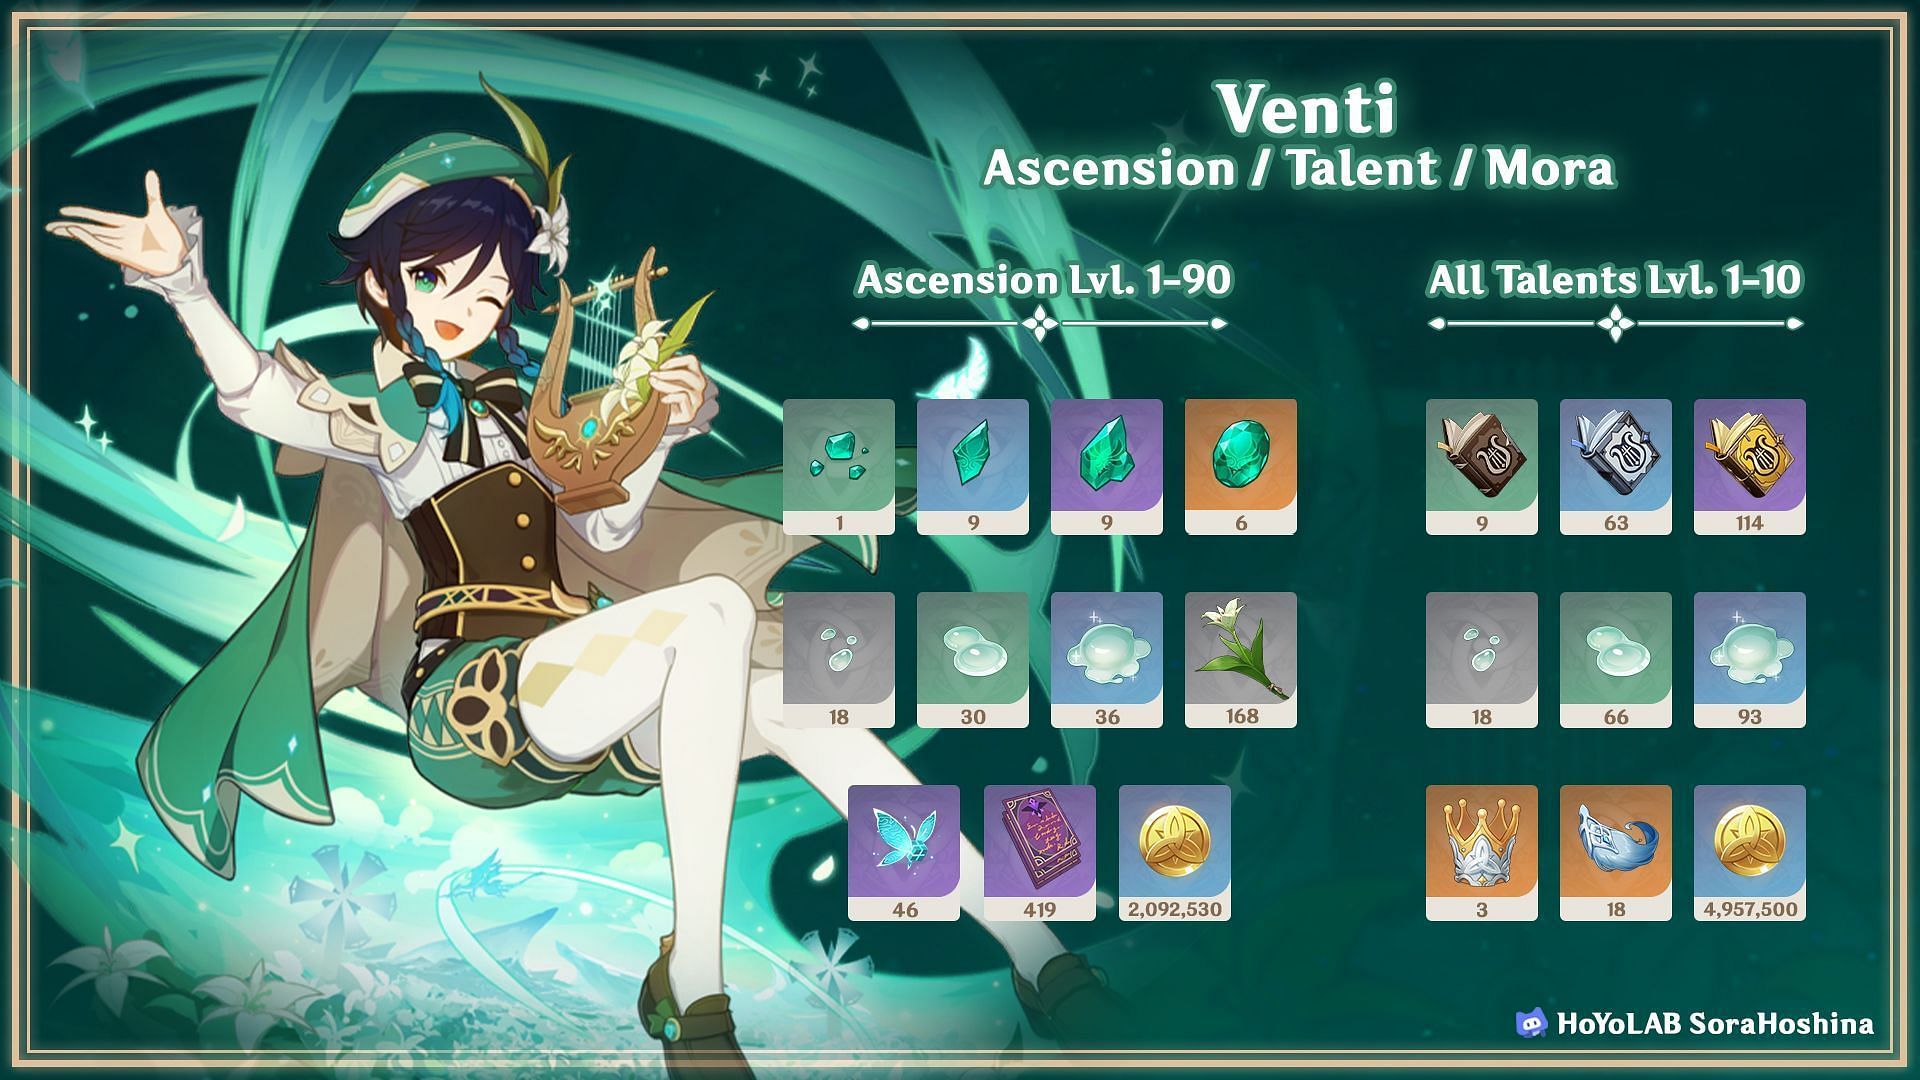 Venti talent materials (Image via HoYoLAB/SaraHoshina)